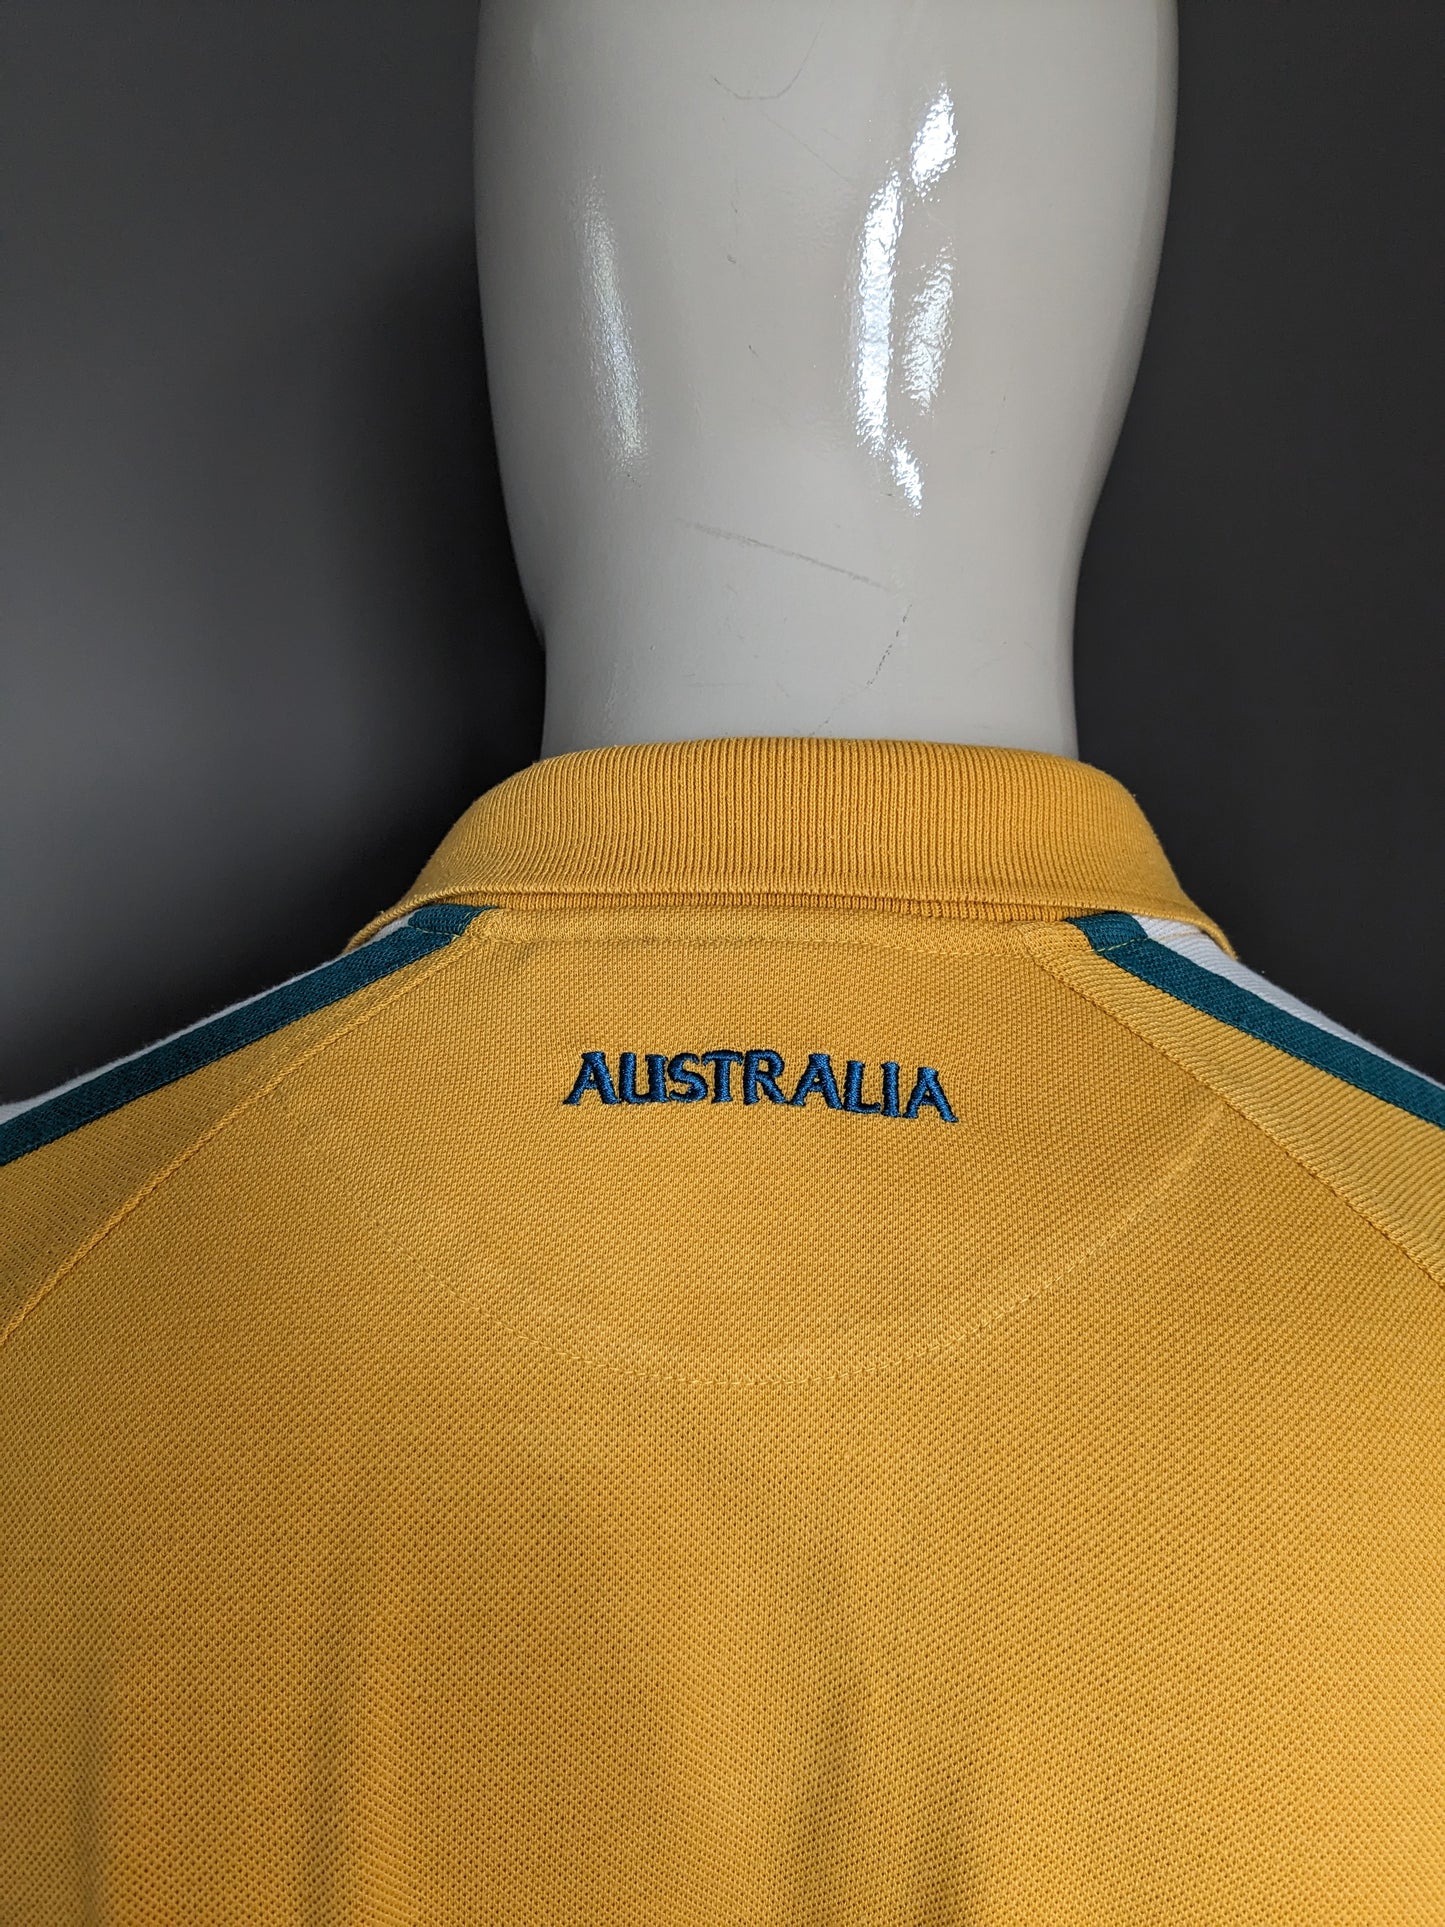 Vintage Australia Rugby Polo. Couleur jaune blanc vert. Taille 2xl / xxl.